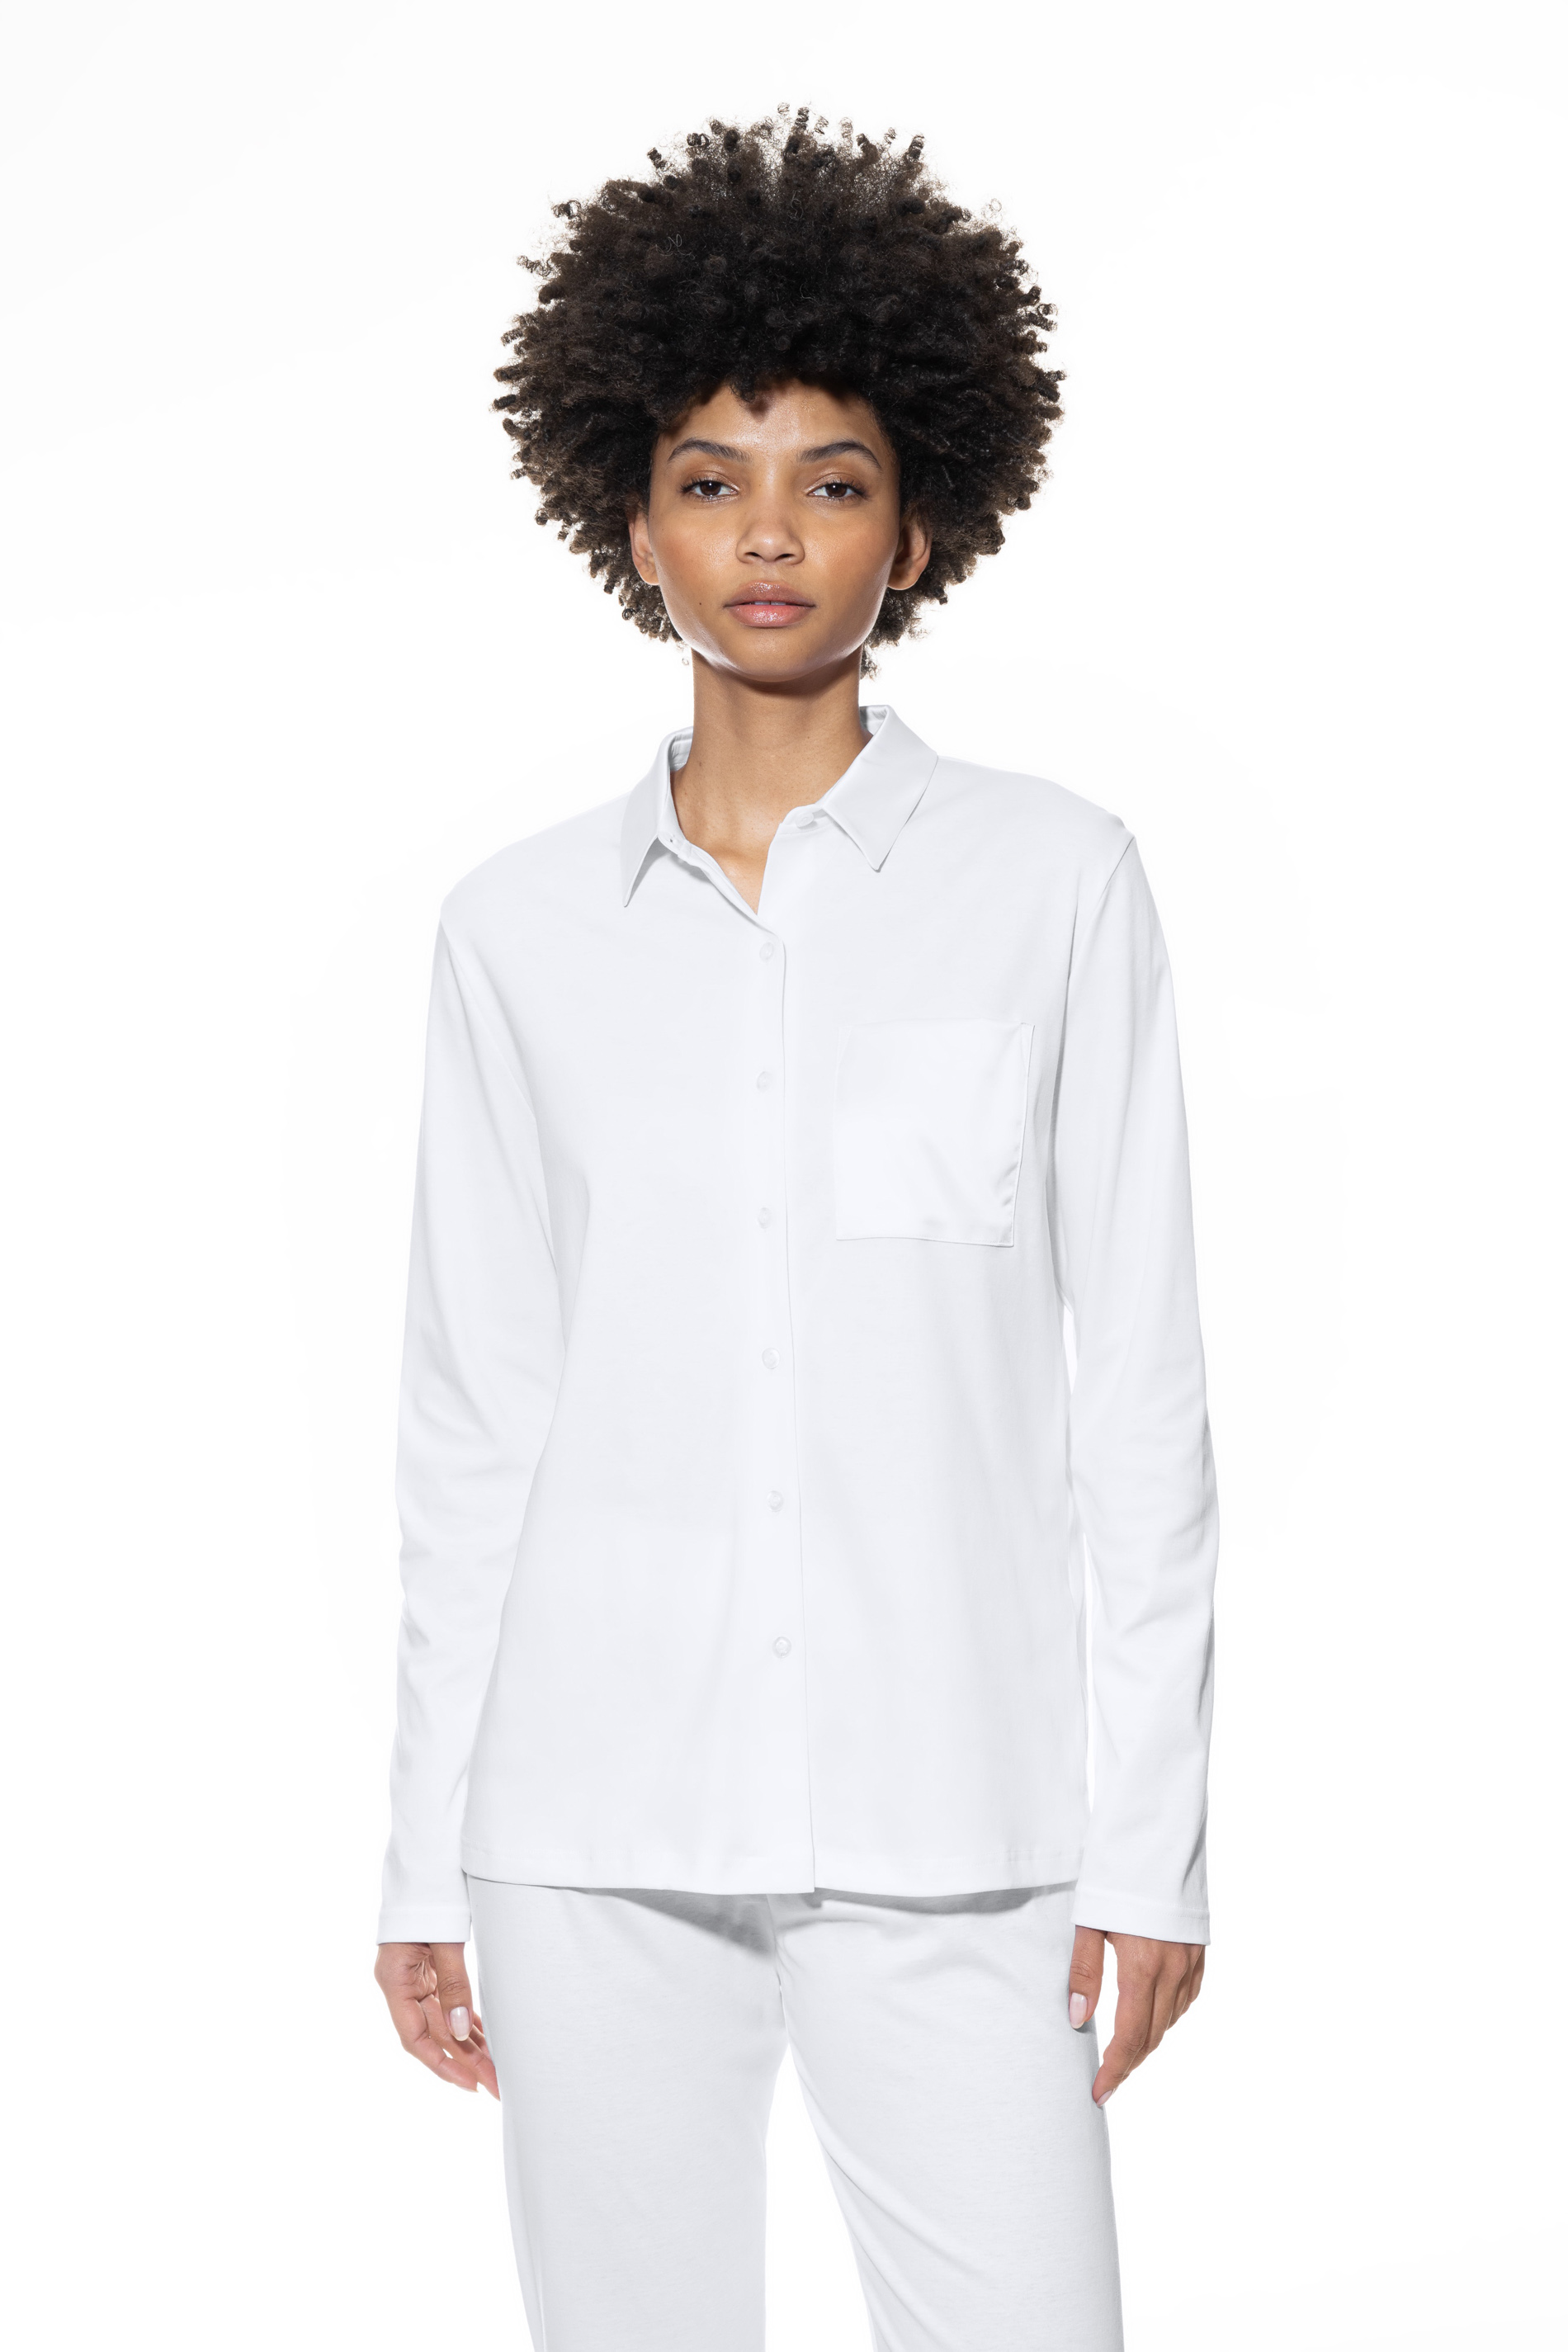 Pyjama Shirt Weiss Serie Sleepsation Frontansicht | mey®